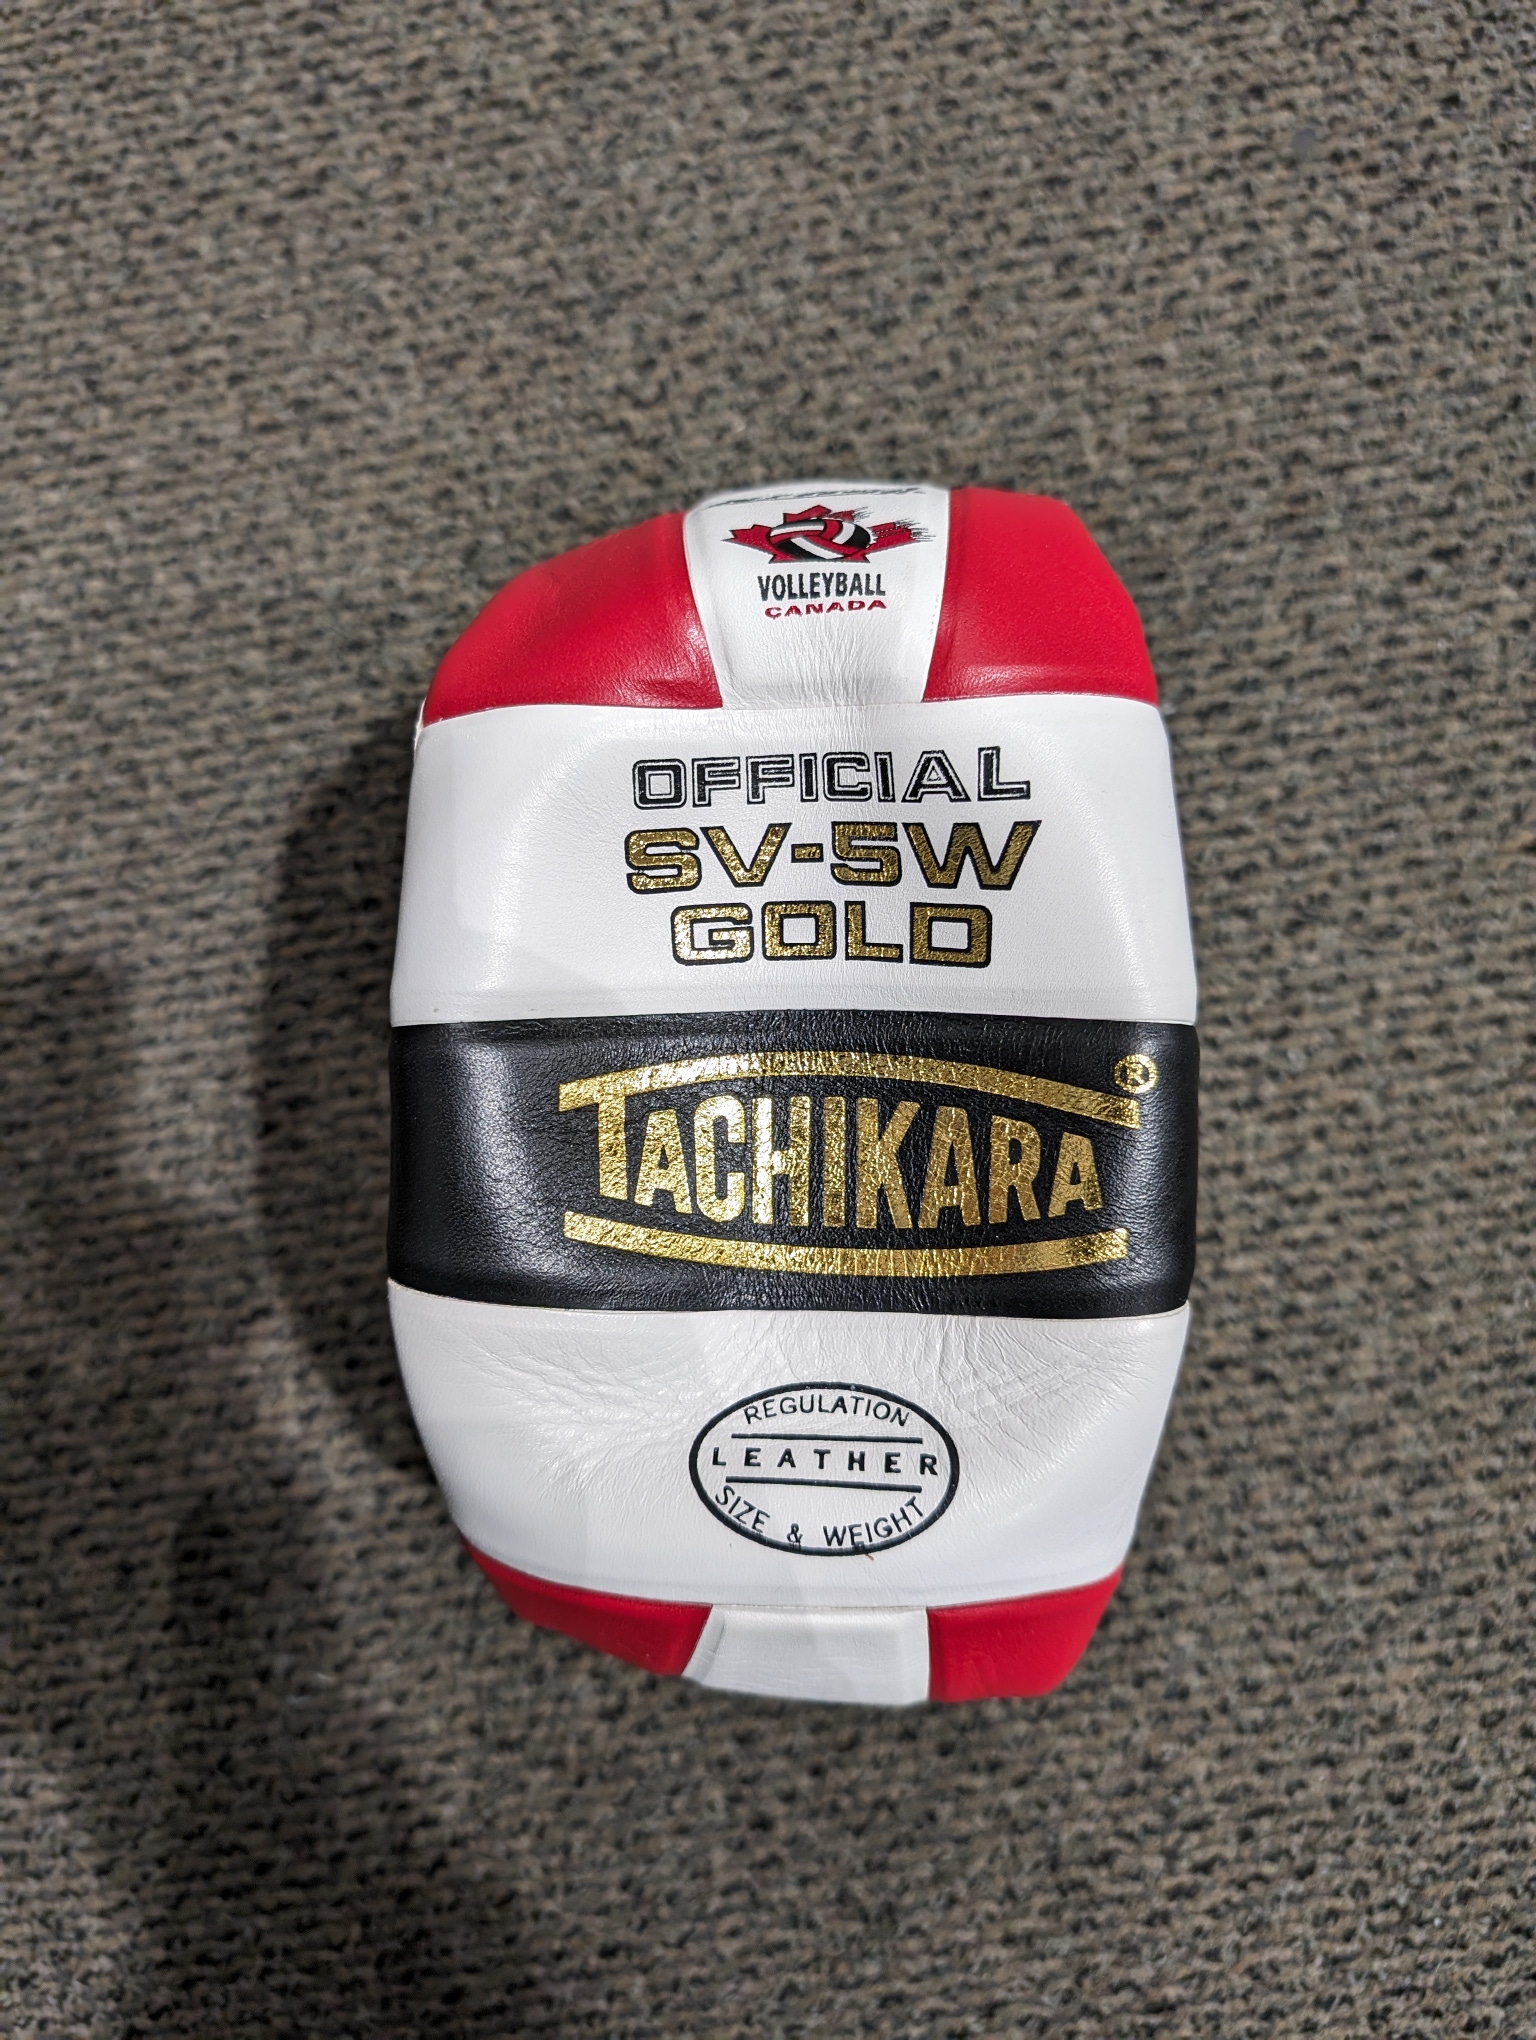 Used Tachikara SV5W Gold Volleyball